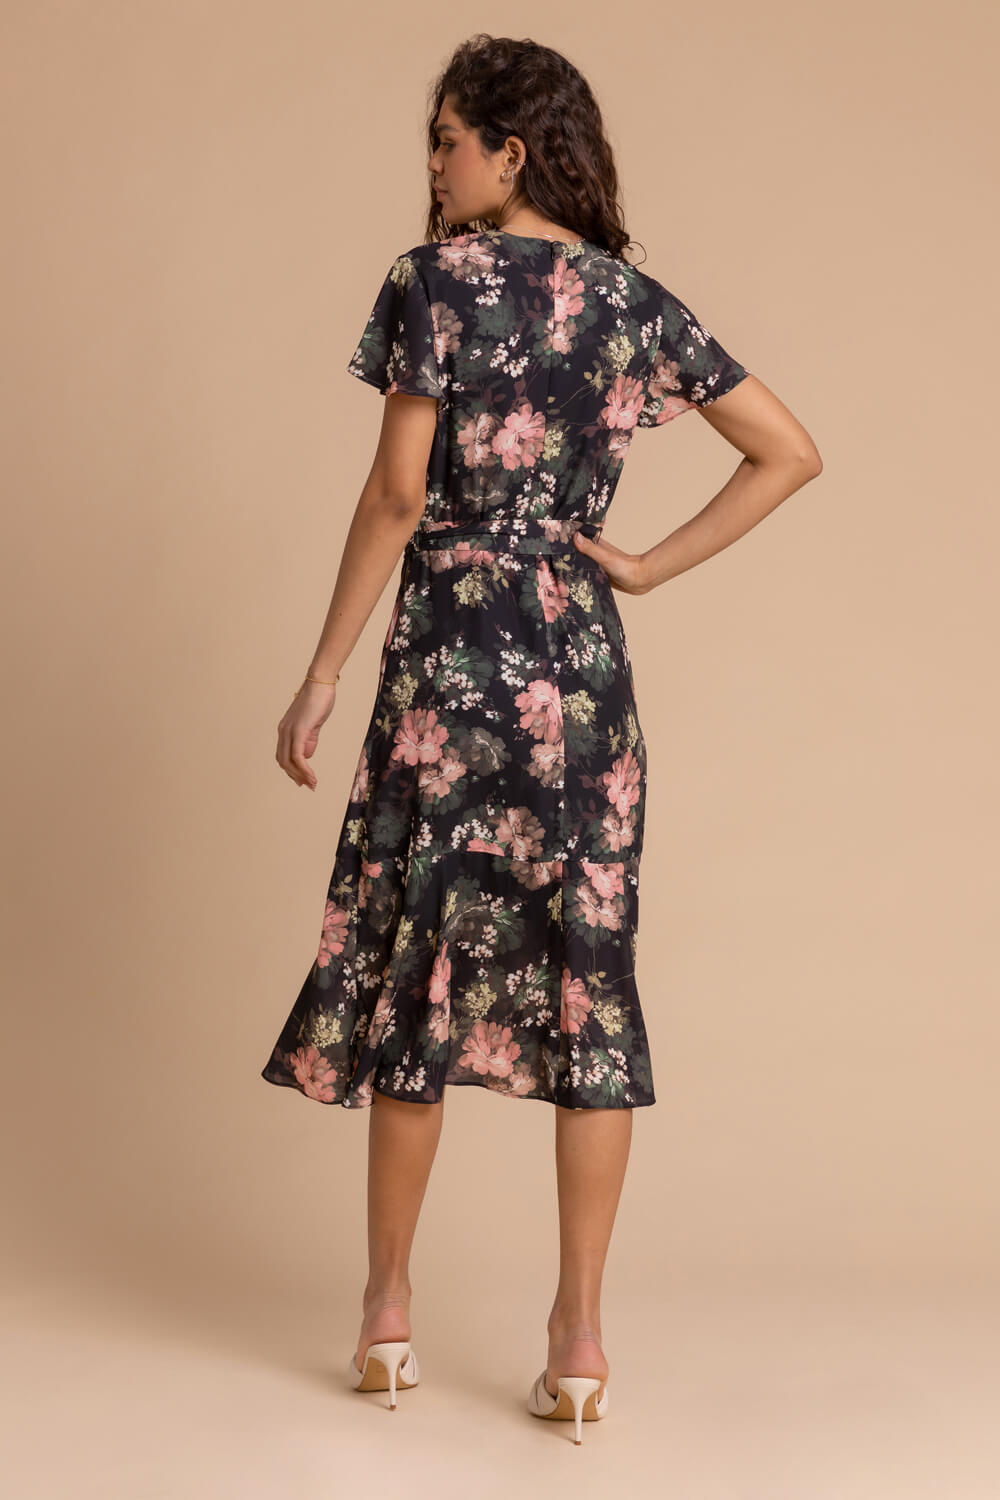 PINK Floral Print Wrap Midi Dress, Image 2 of 5